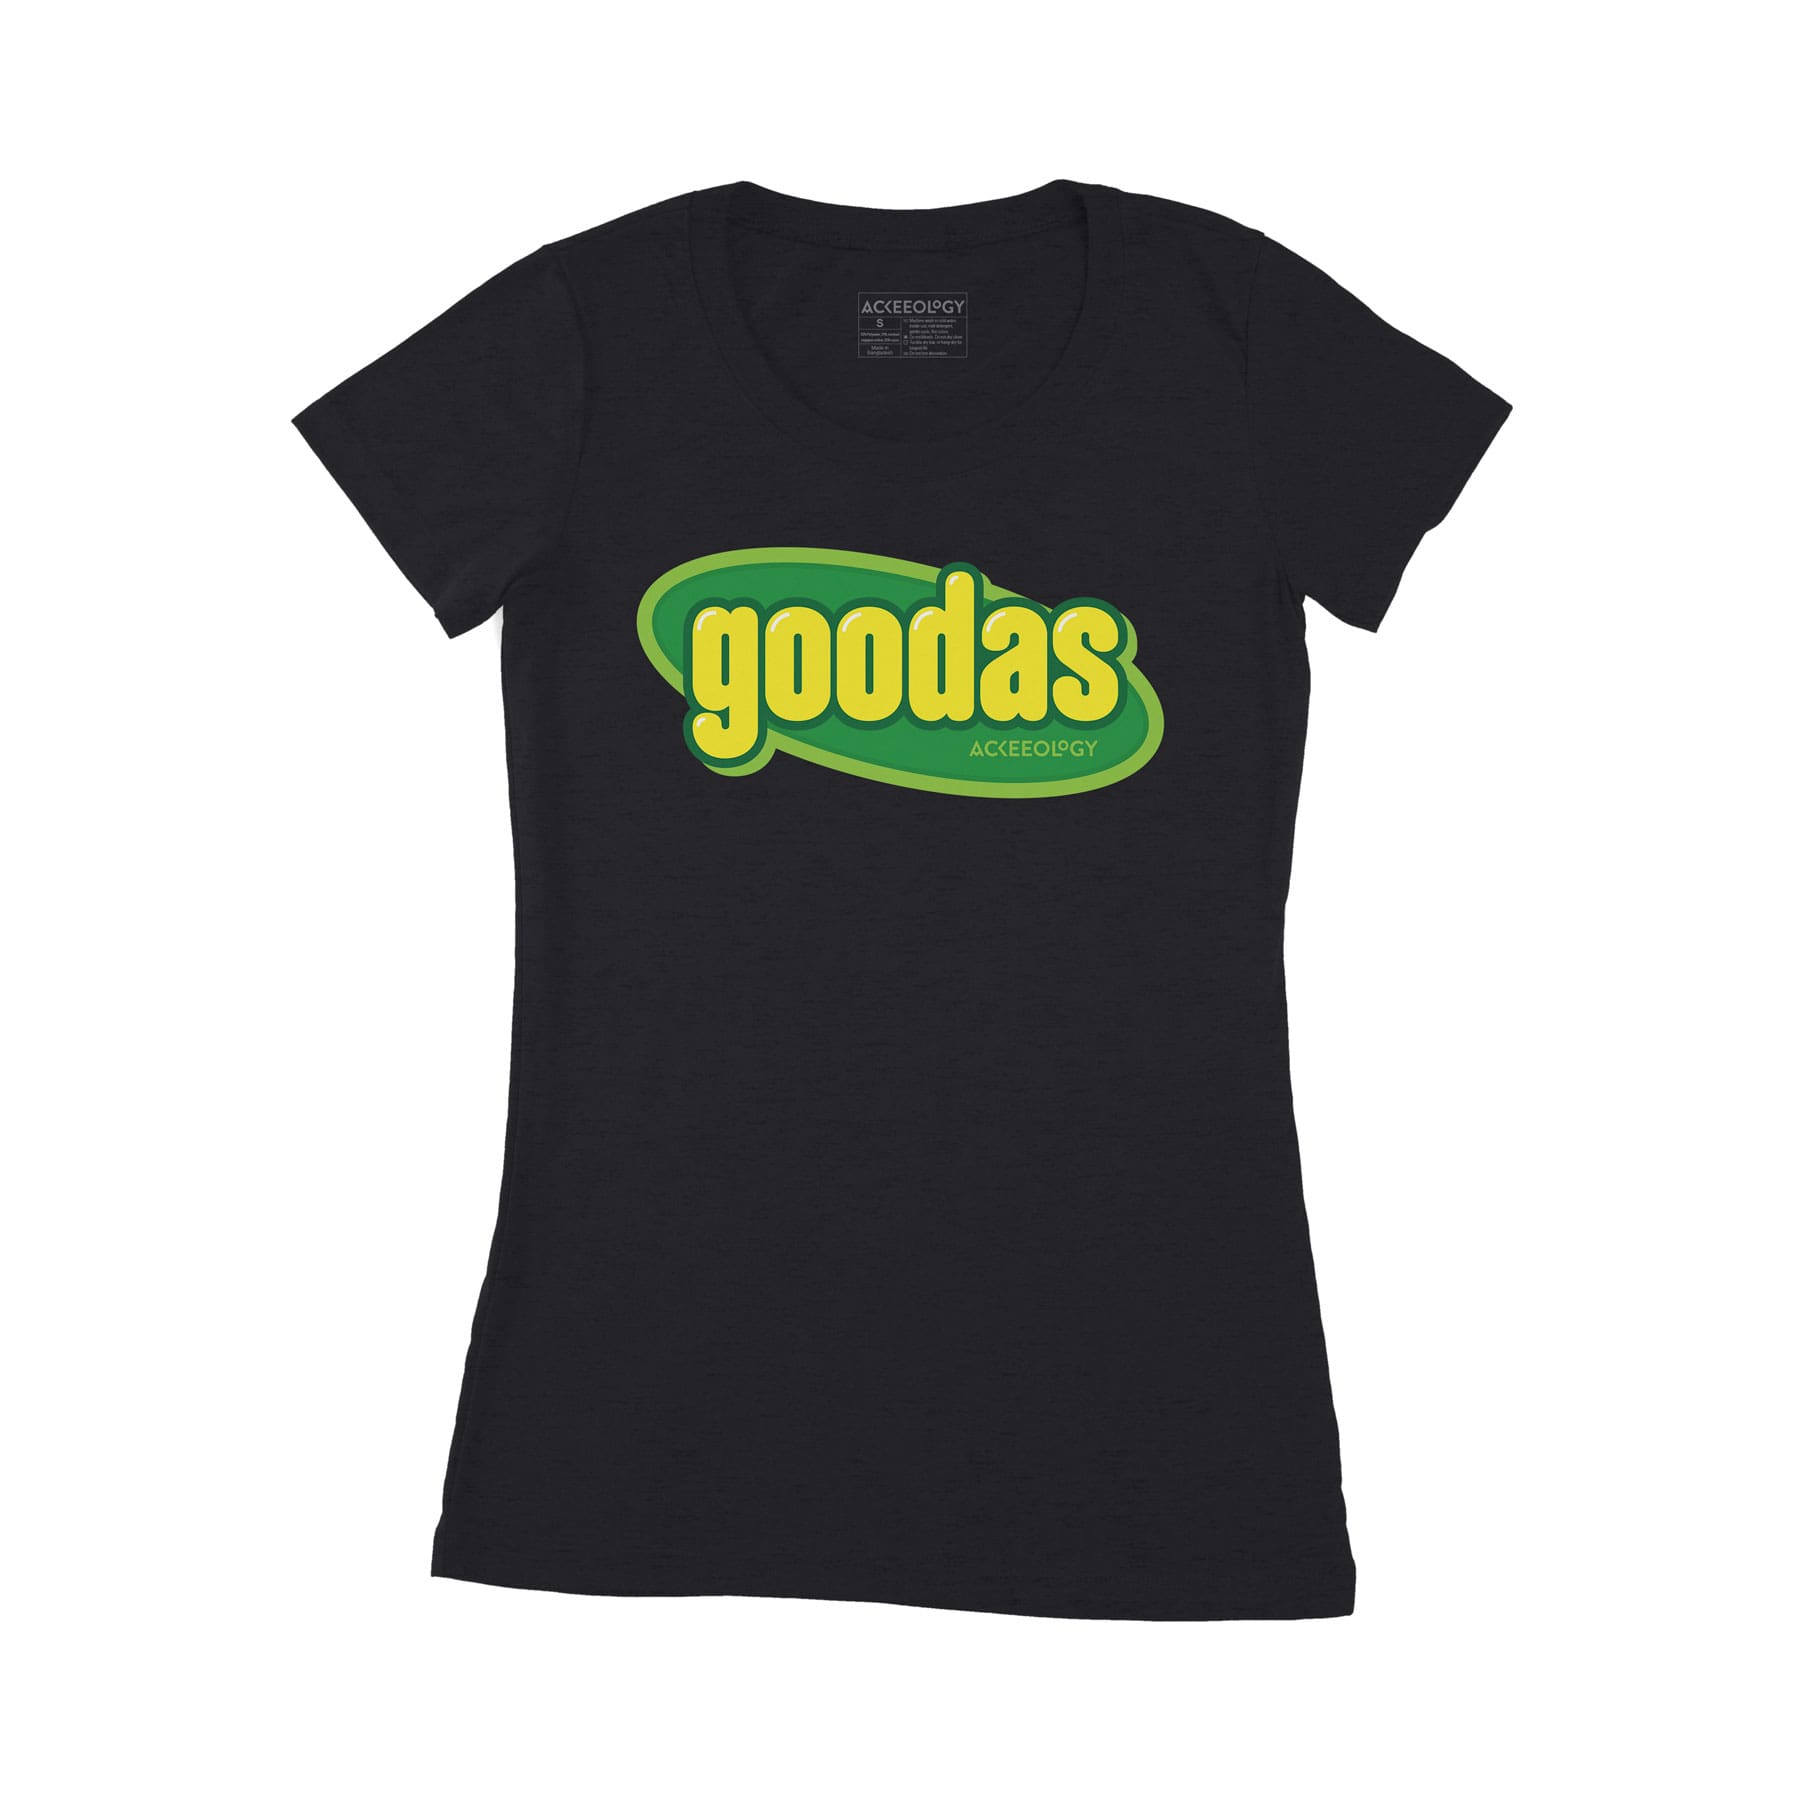 Goodas - women's tee